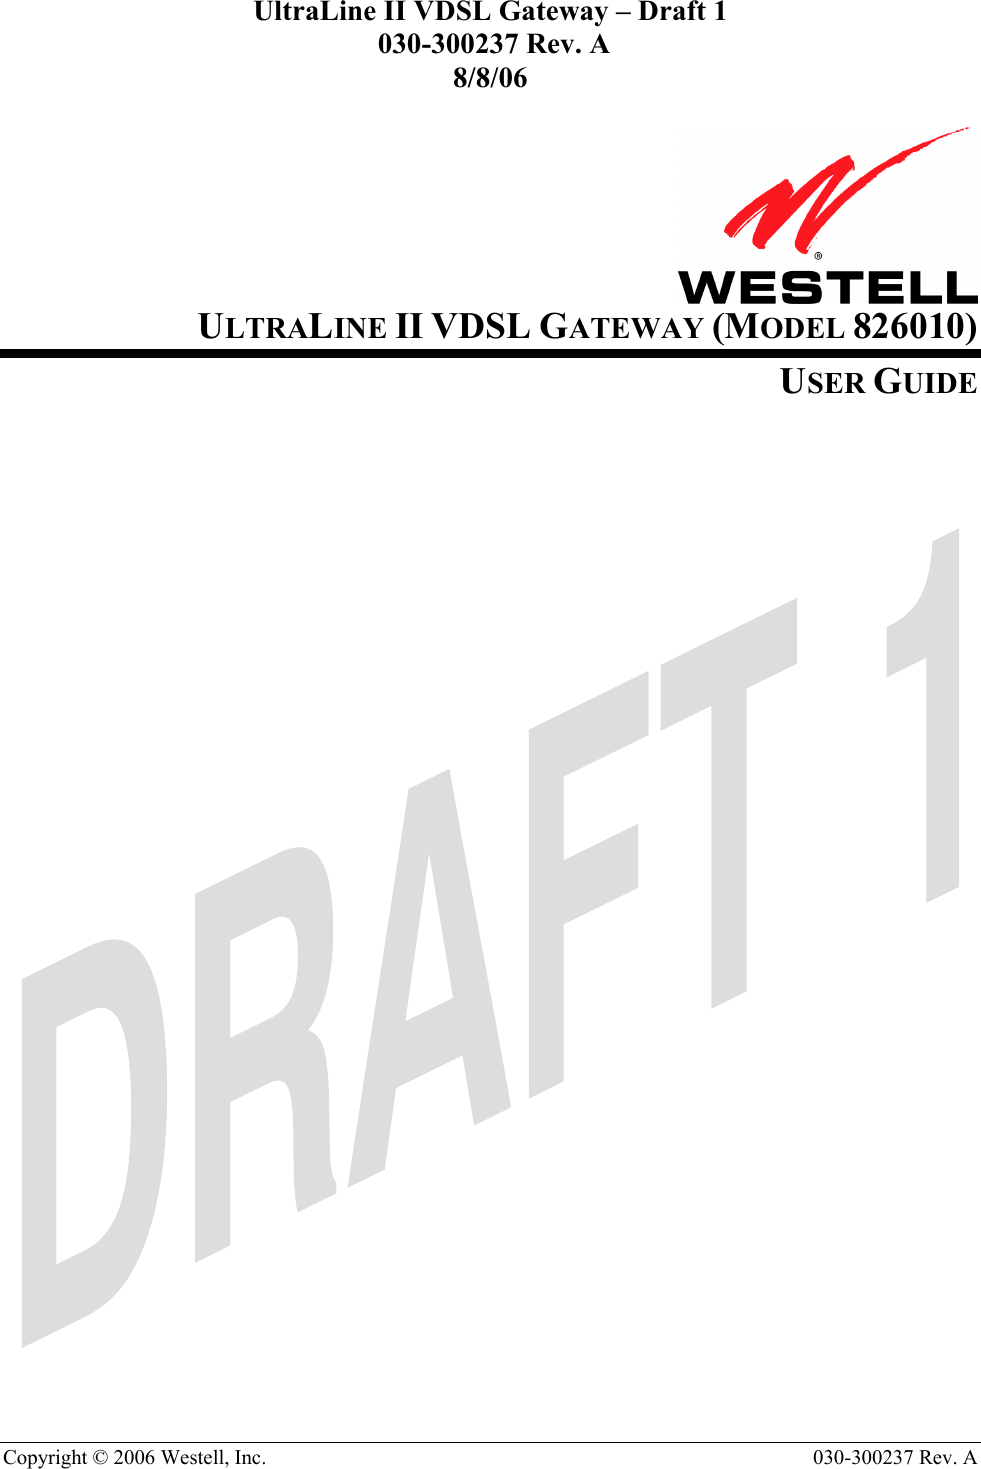 UltraLine II VDSL Gateway – Draft 1  030-300237 Rev. A 8/8/06  Copyright © 2006 Westell, Inc.   030-300237 Rev. A                     ULTRALINE II VDSL GATEWAY (MODEL 826010) USER GUIDE                                  